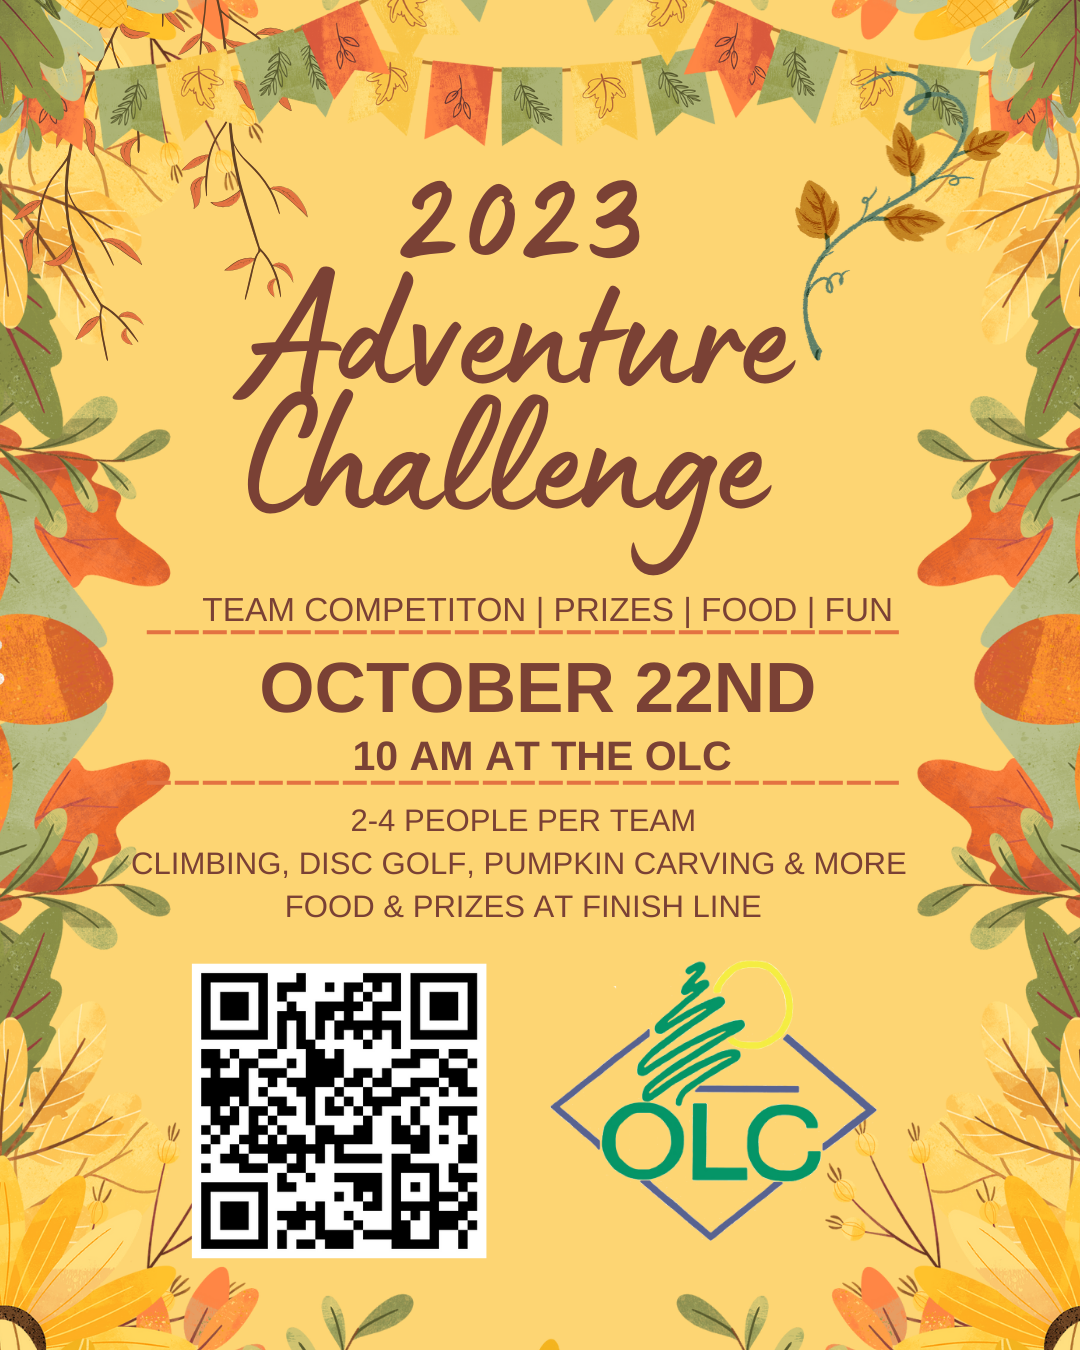 2023 Adventure Challenge team competition flyer